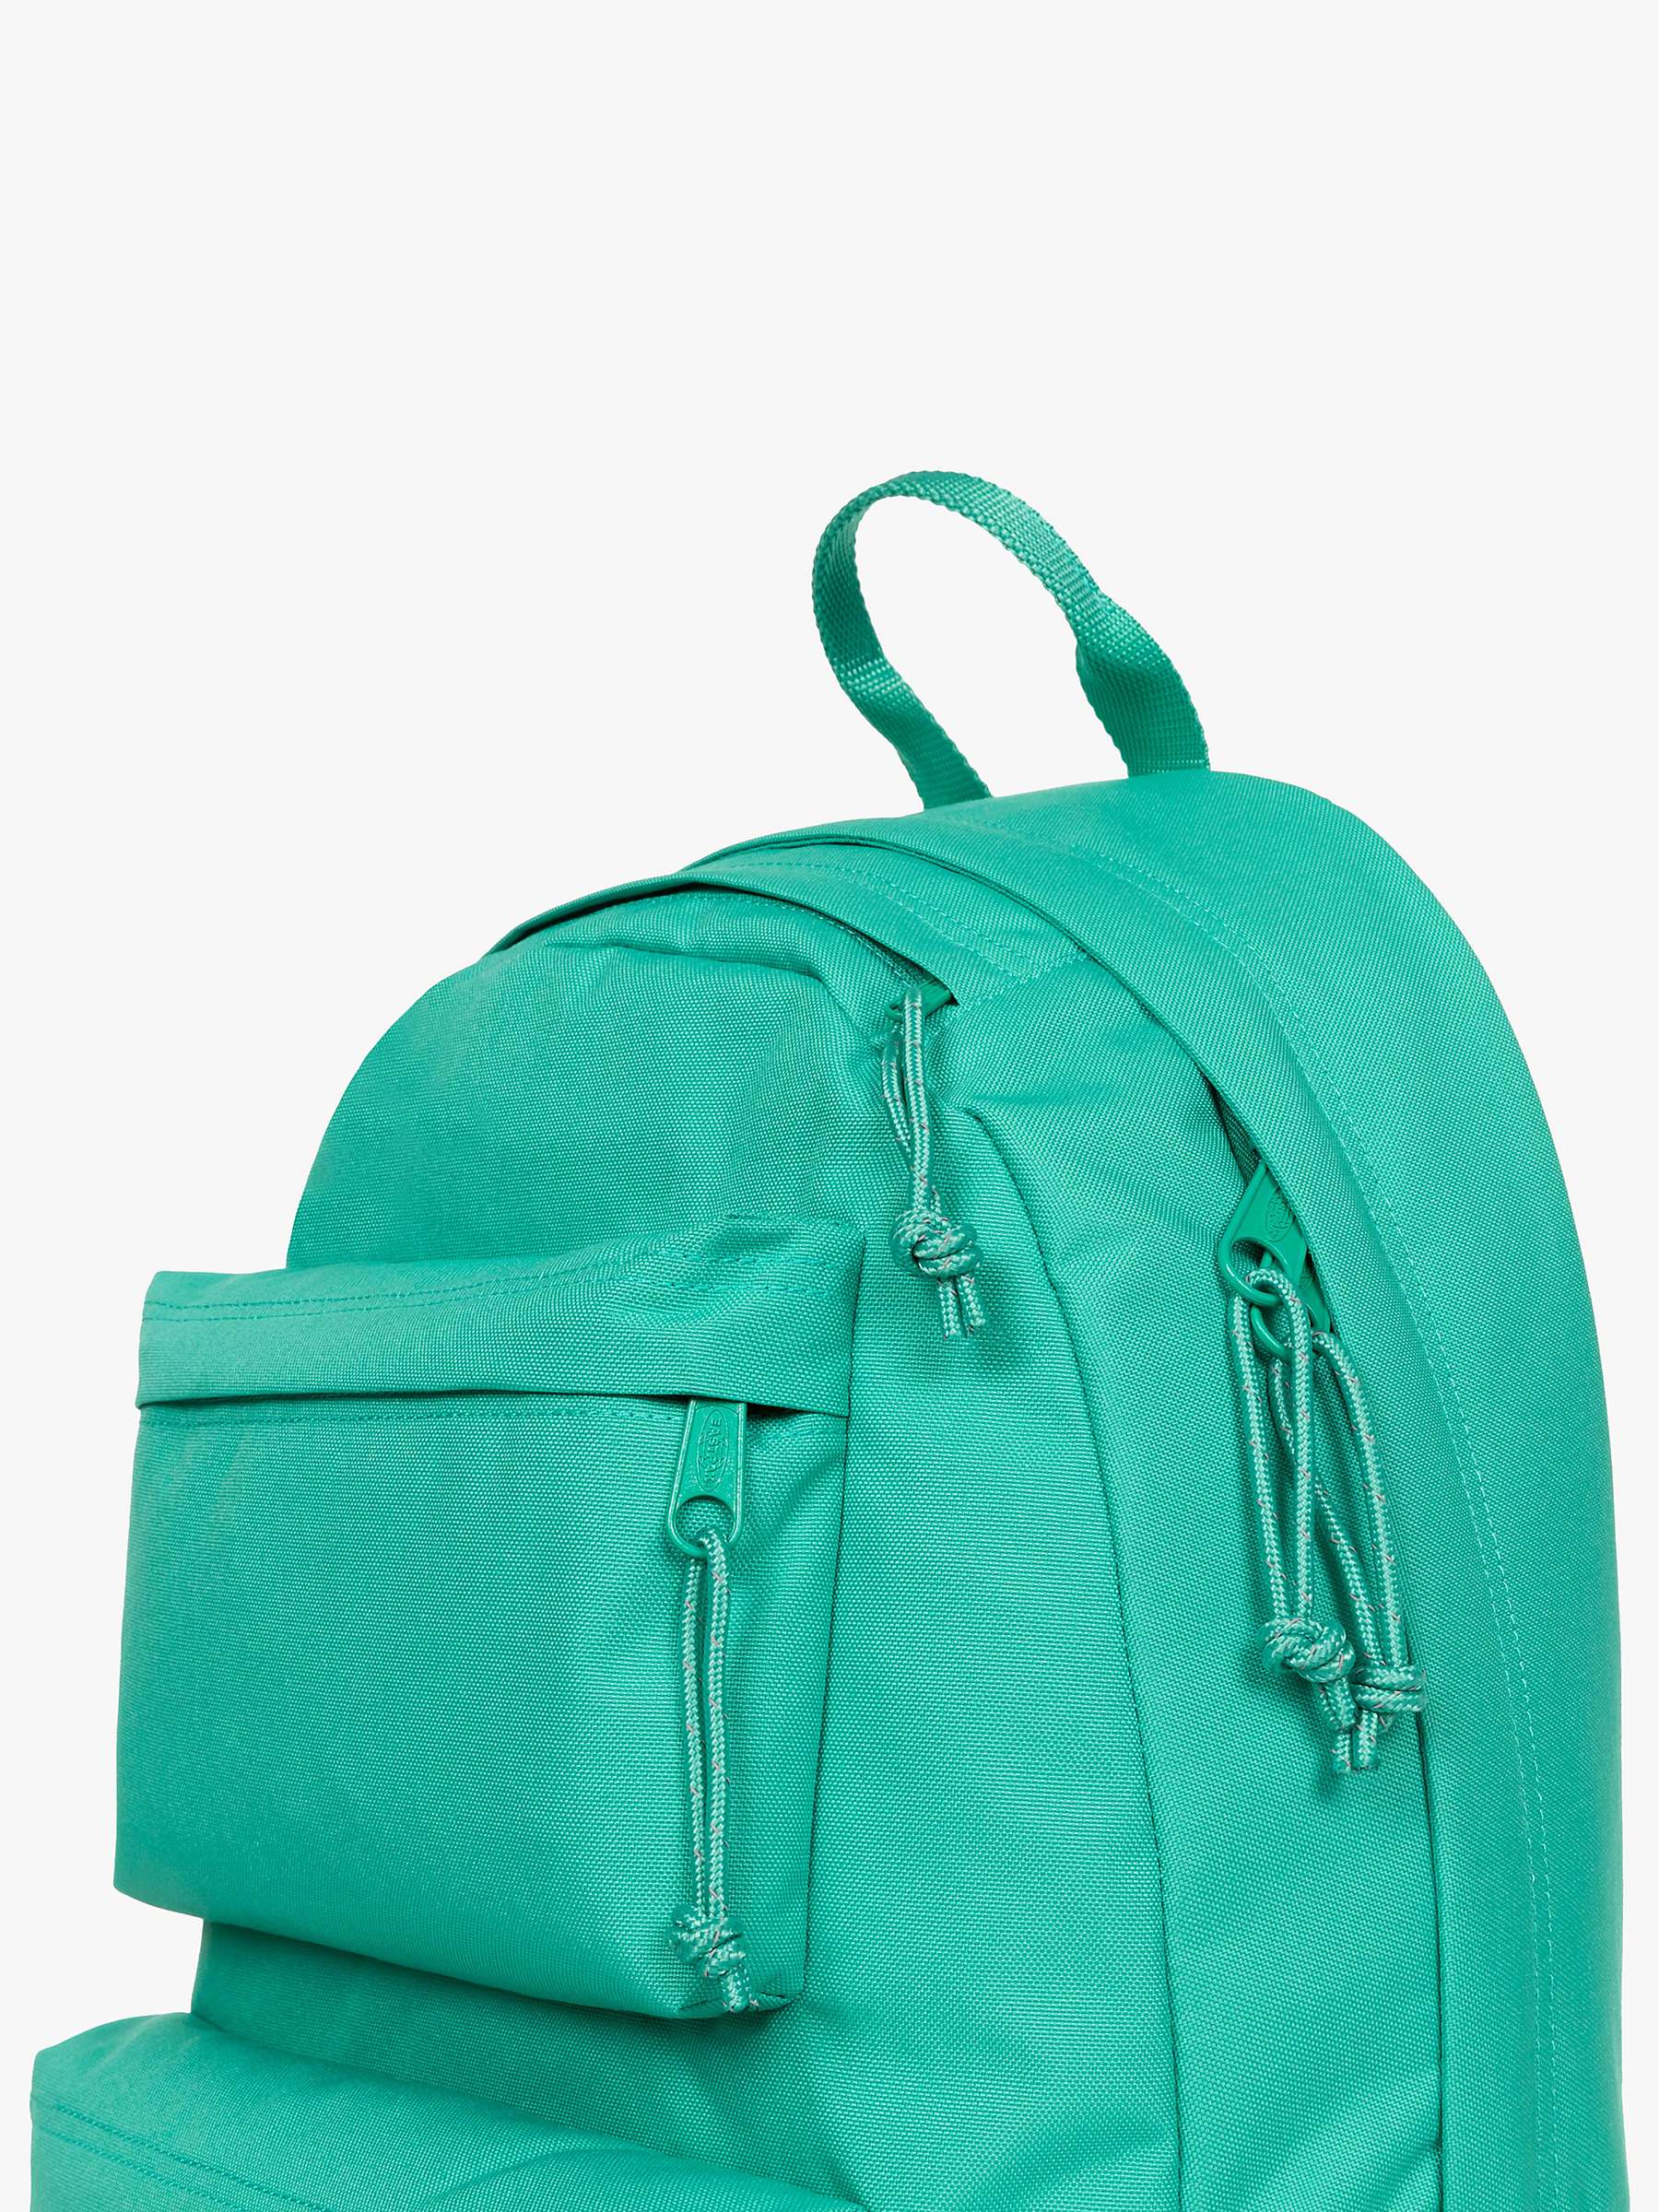 Buy Eastpak Padded Double Backpack Online at johnlewis.com